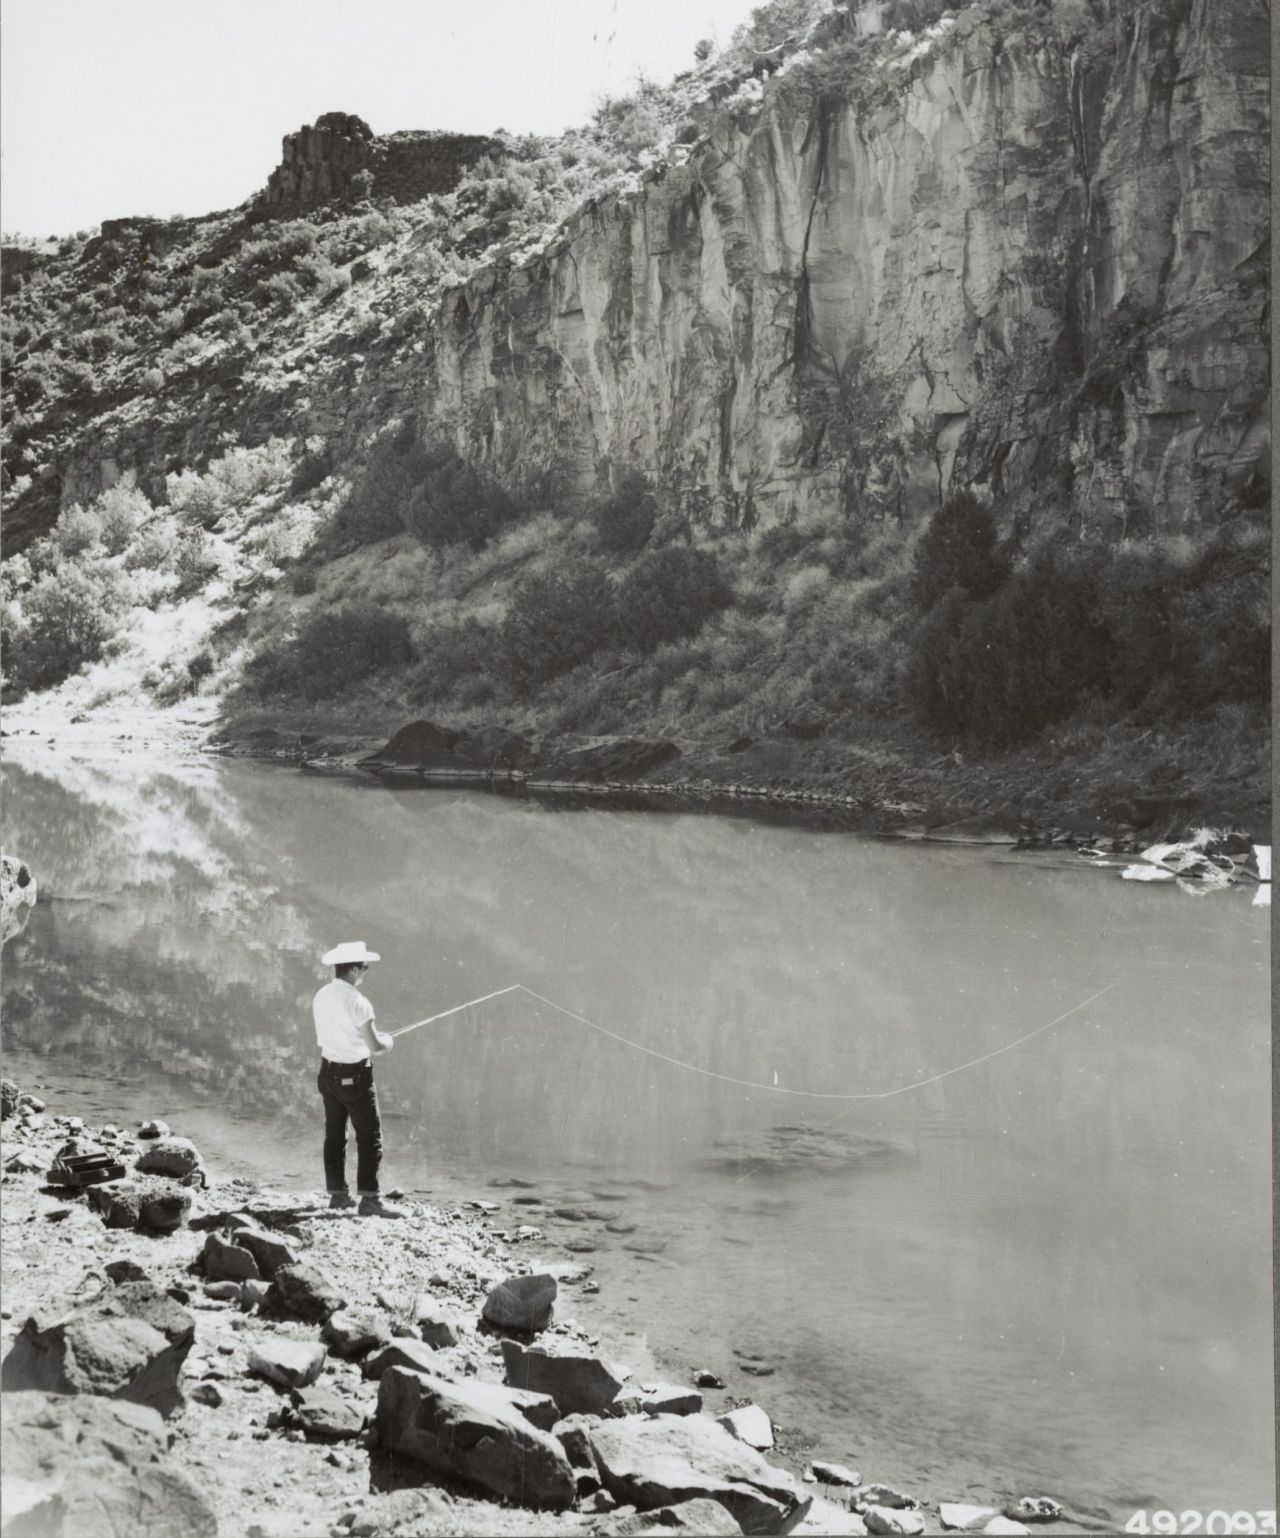 gameraboy:
“ Fishing on the Rio Grande, New Mexico, 1959
”